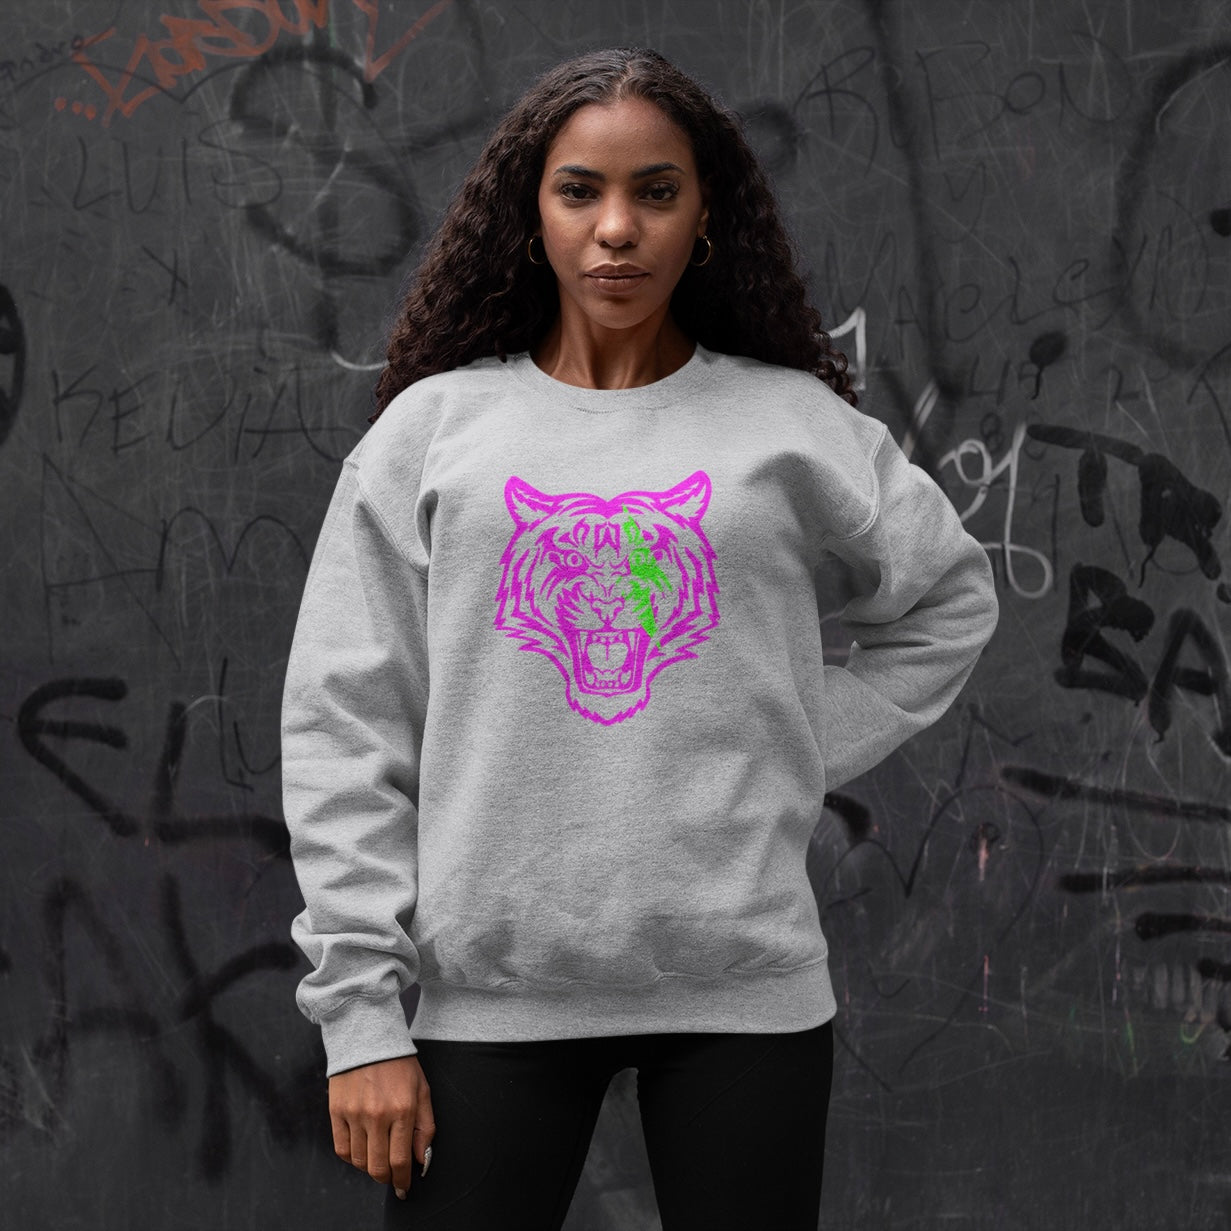 Women’s cotton grey sweatshirt with fluorescent pink tiger